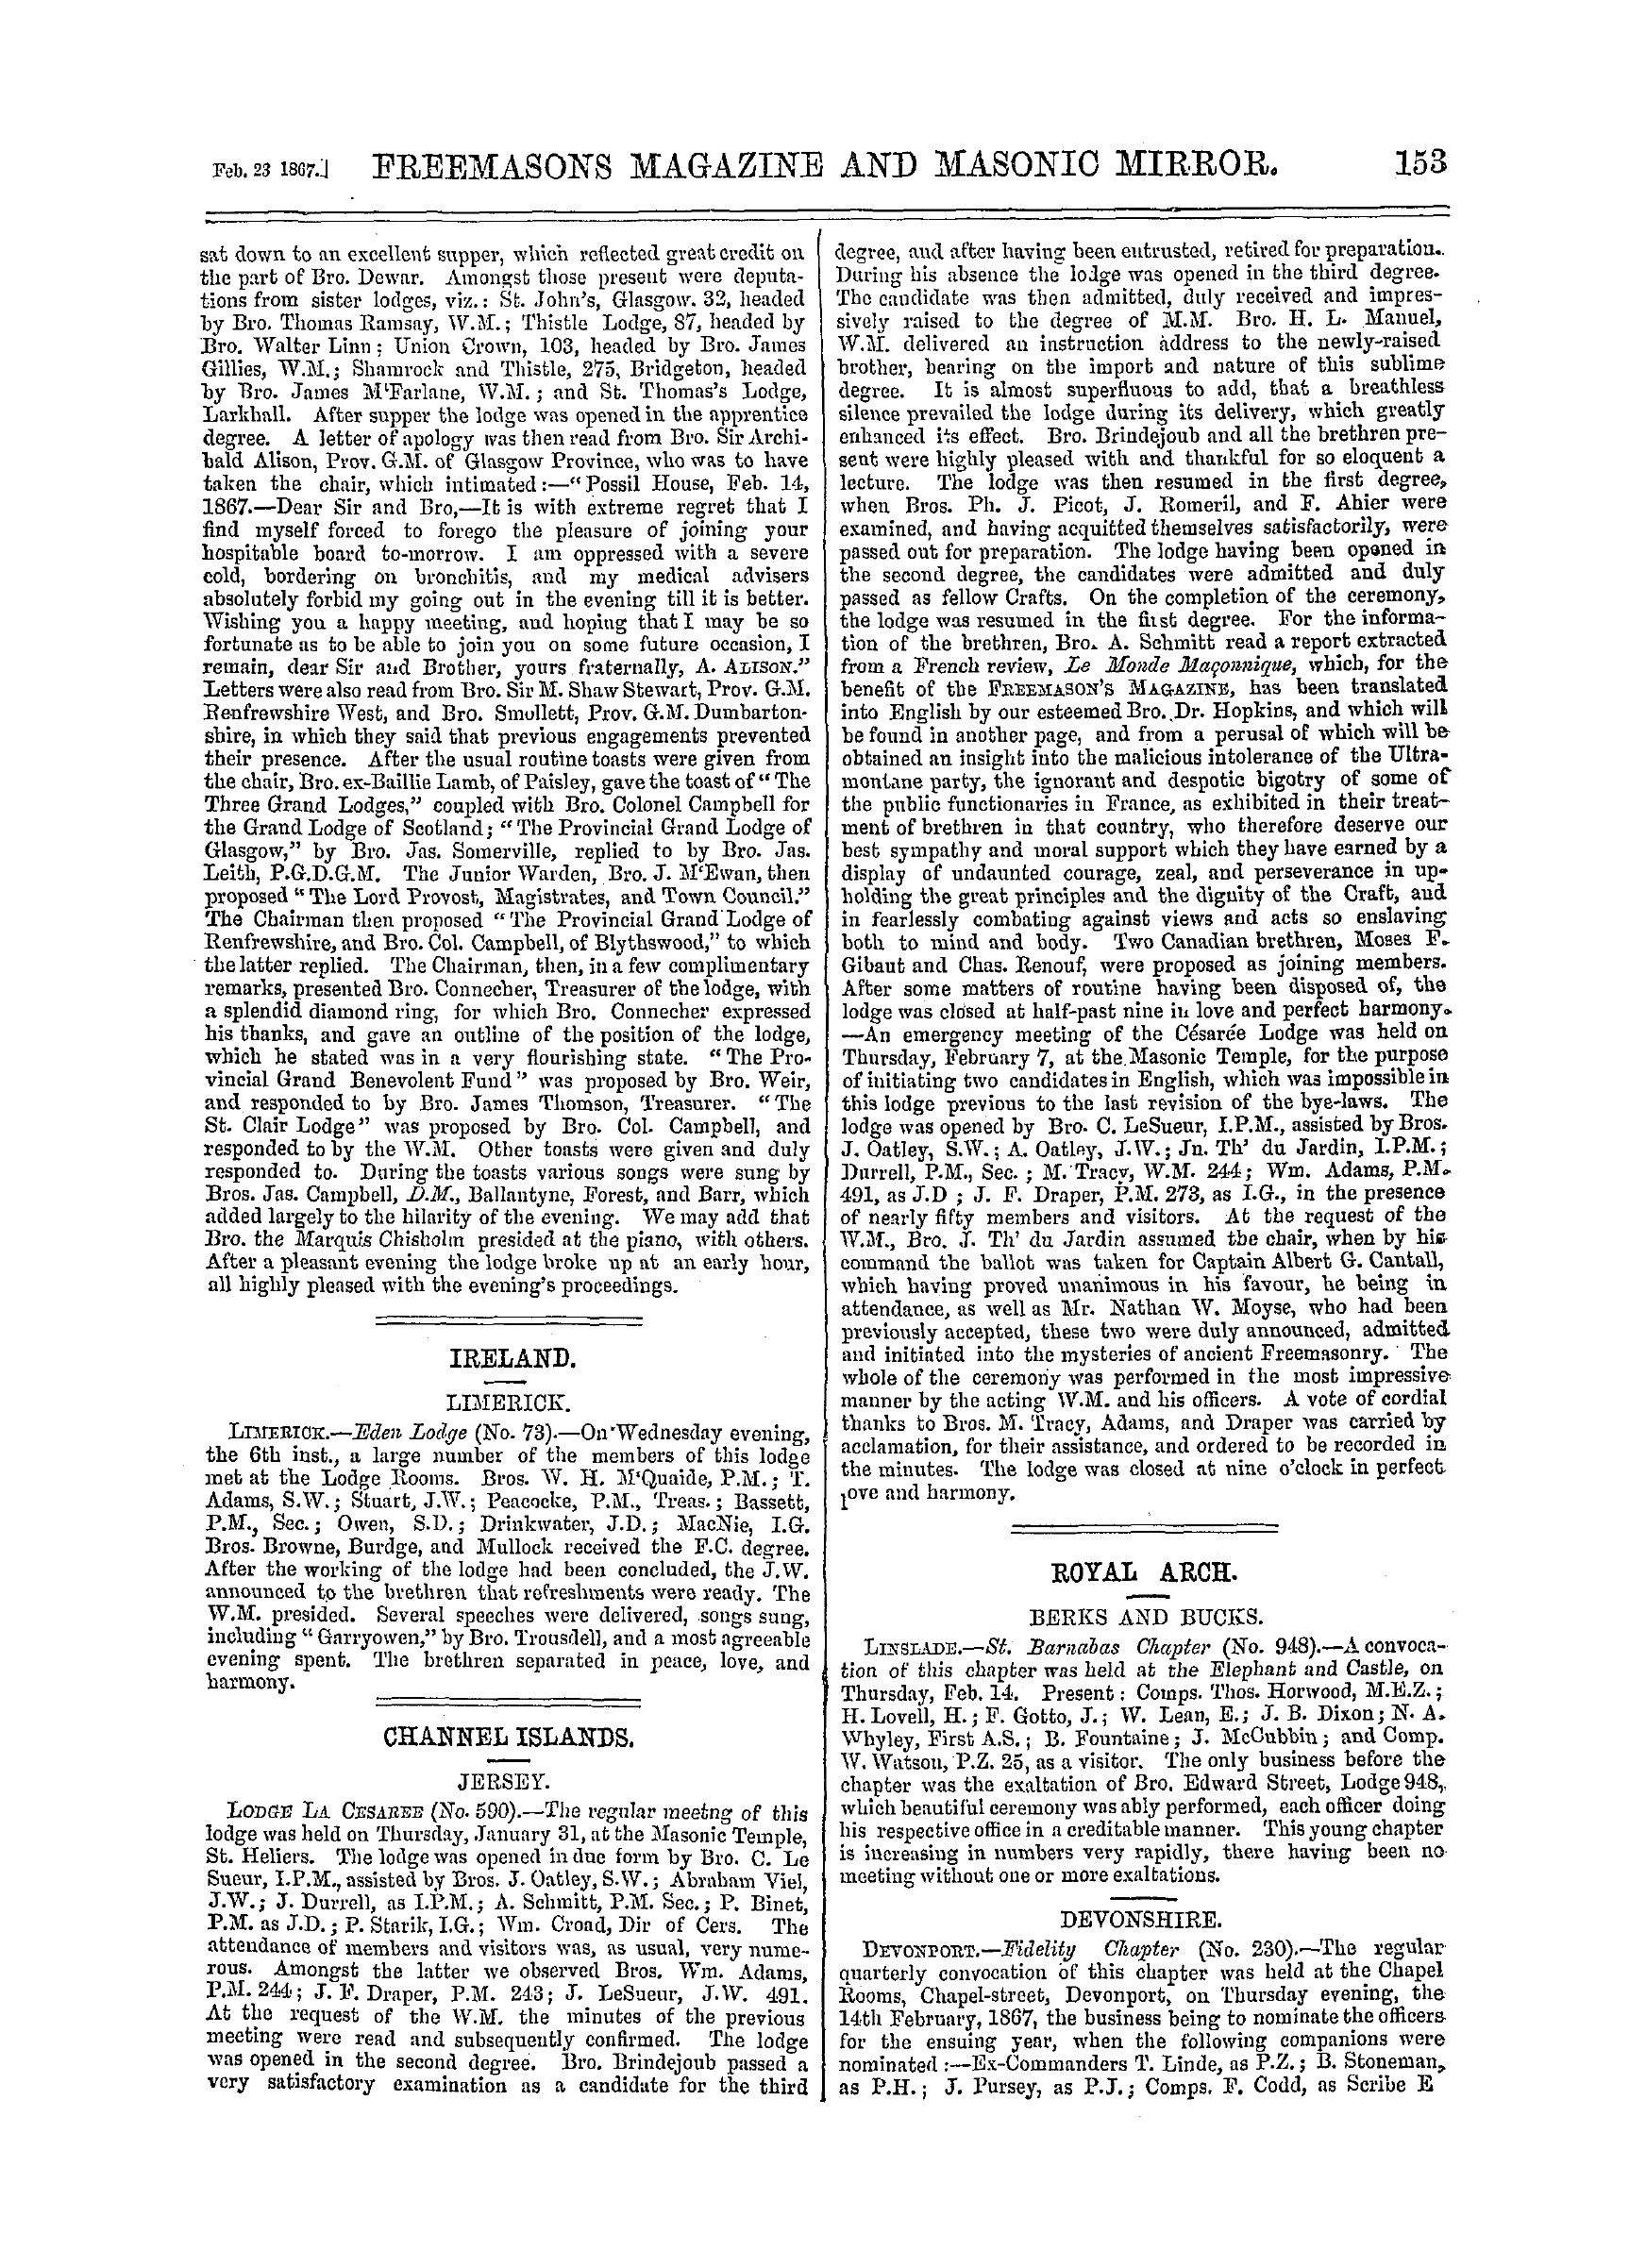 The Freemasons' Monthly Magazine: 1867-02-23 - Royal Arch.